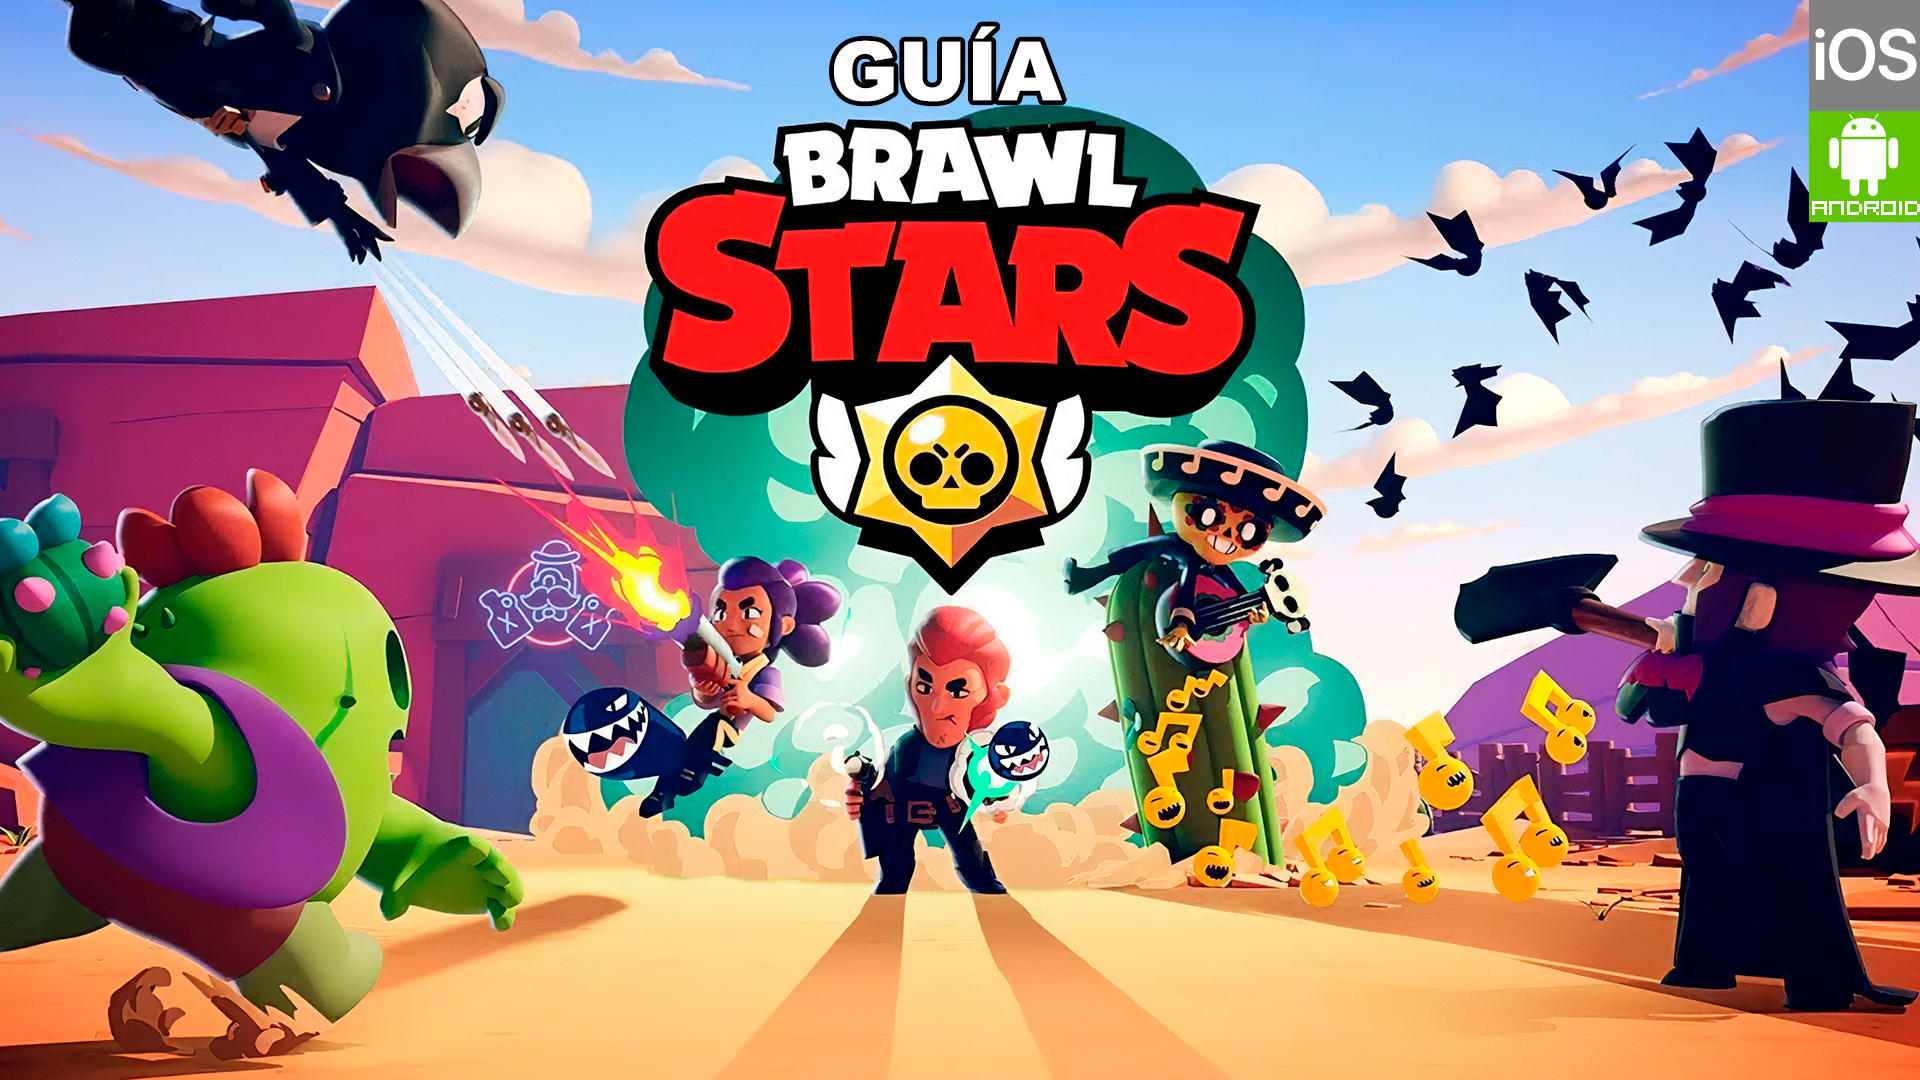 Guia Brawl Stars Trucos Y Consejos Para Ganar Vandal - grupo de whatsapp gemas gratis brawl stars